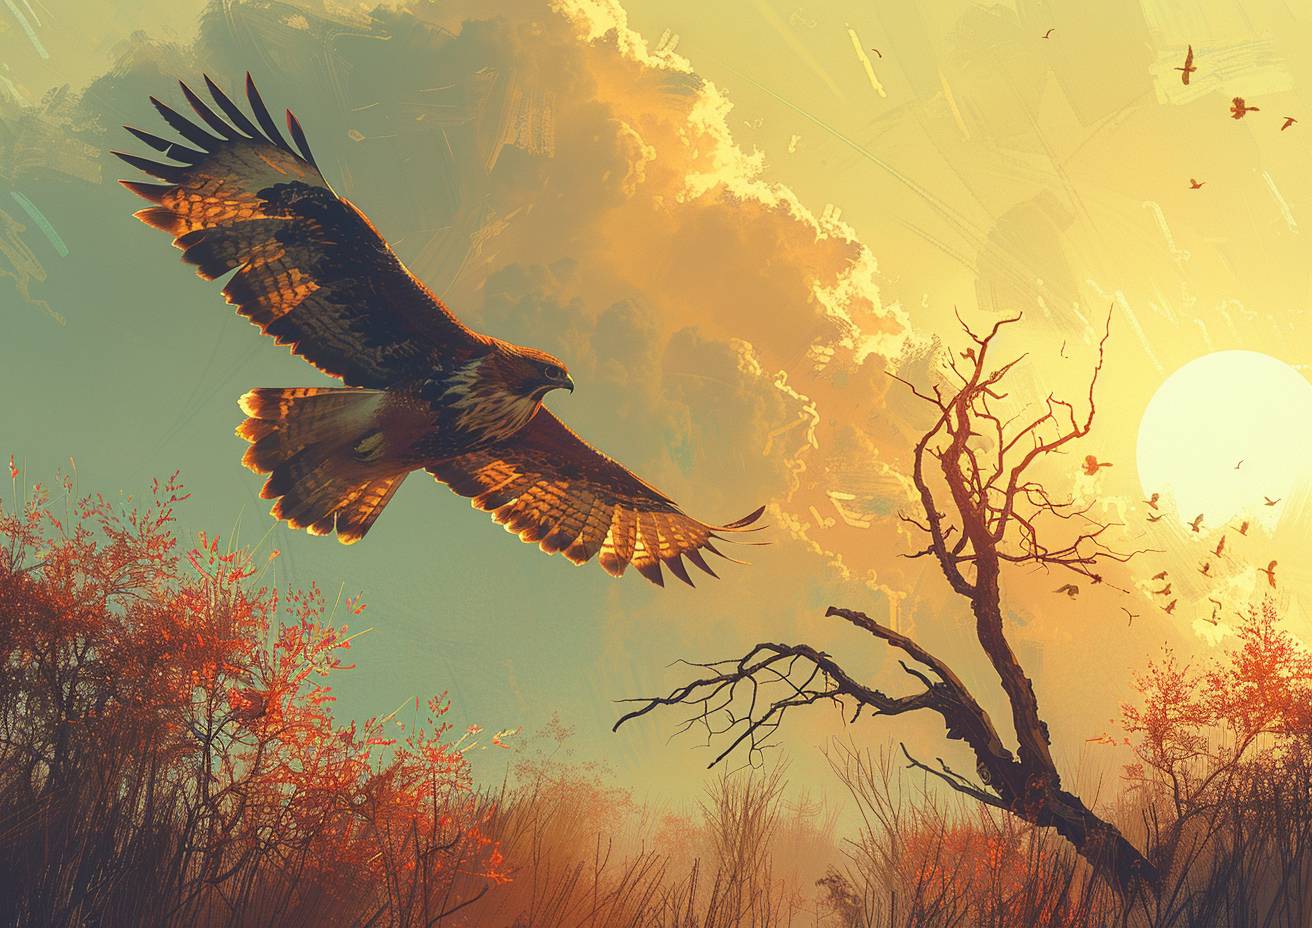 Minimalist landscape, a hawk launches itself from a dead tree, wings strobing in the sunlight